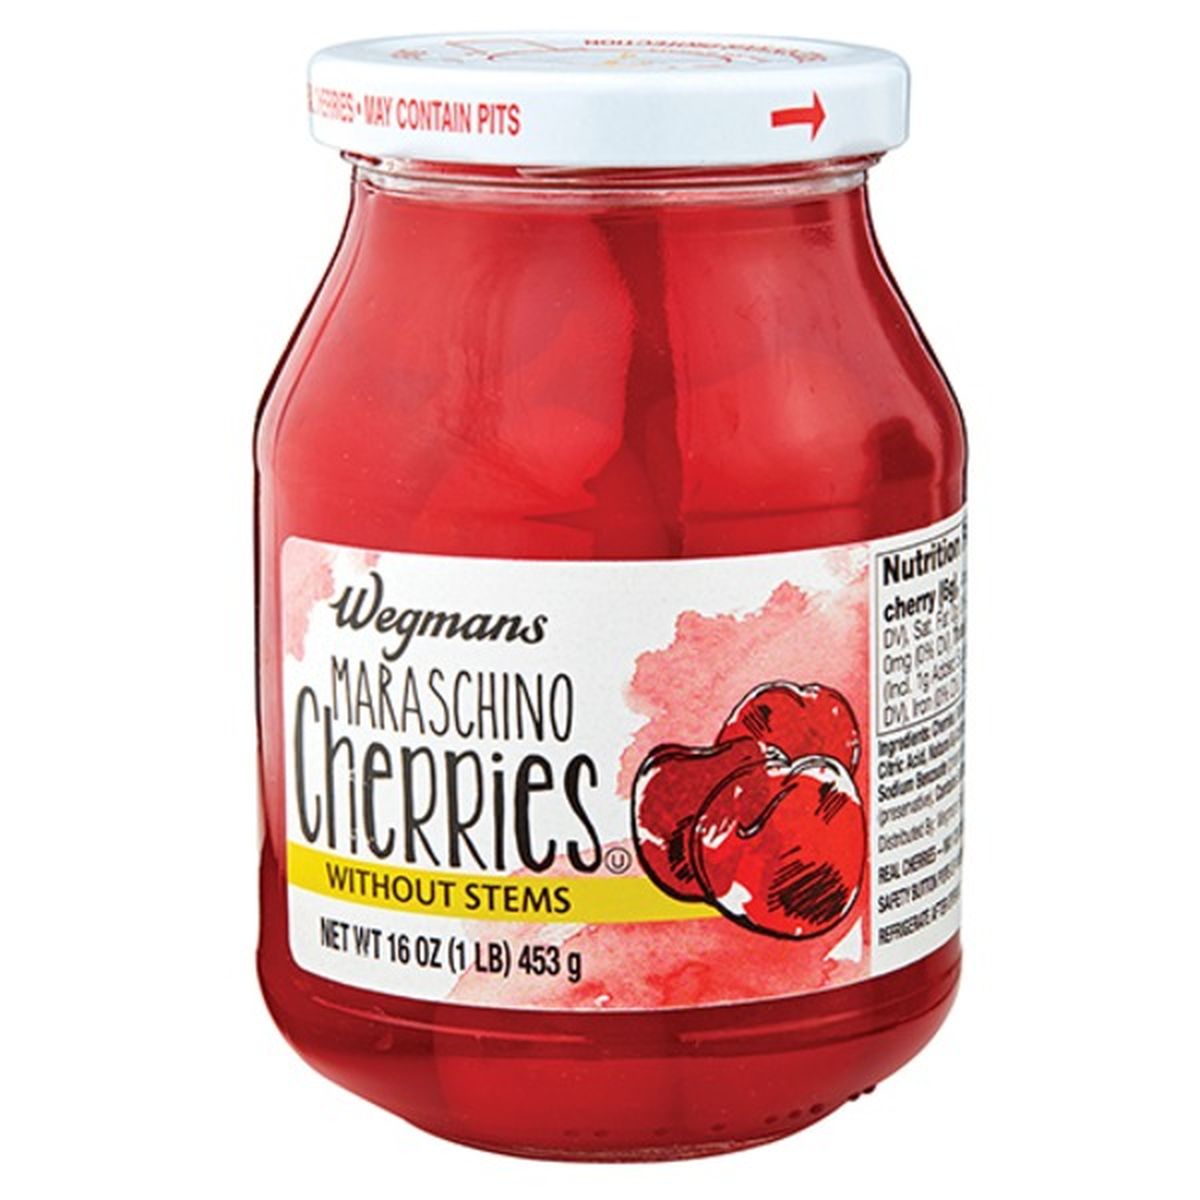 Calories in Wegmans Maraschino Cherries without Stems